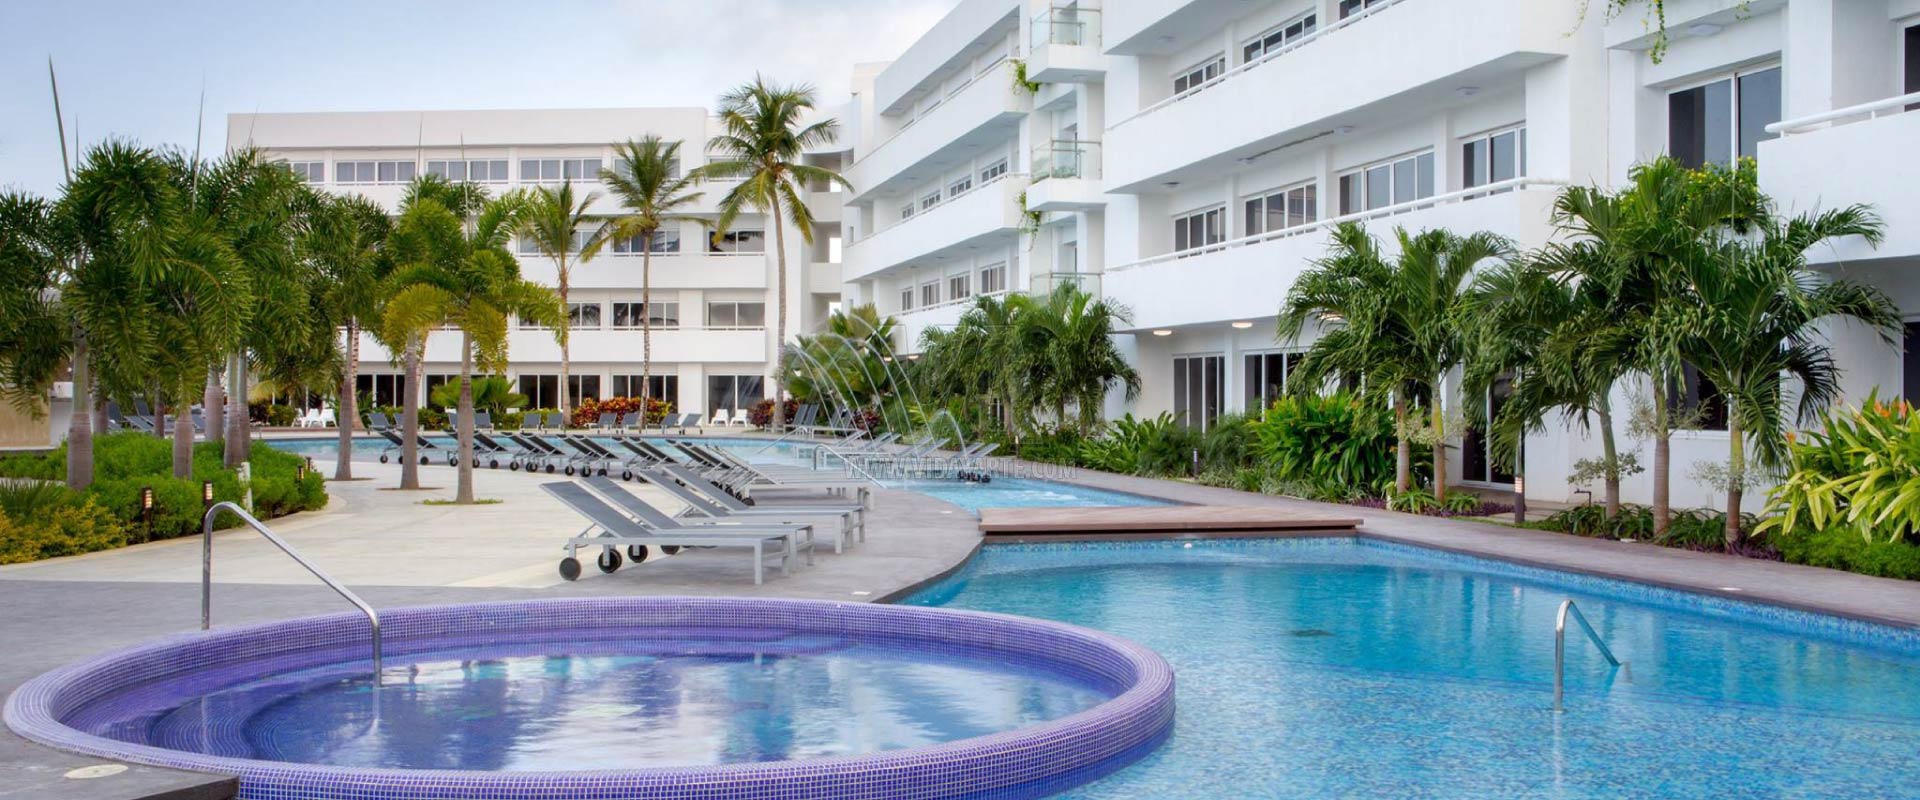 Quovadis - Margarita Hotel Palm Beach